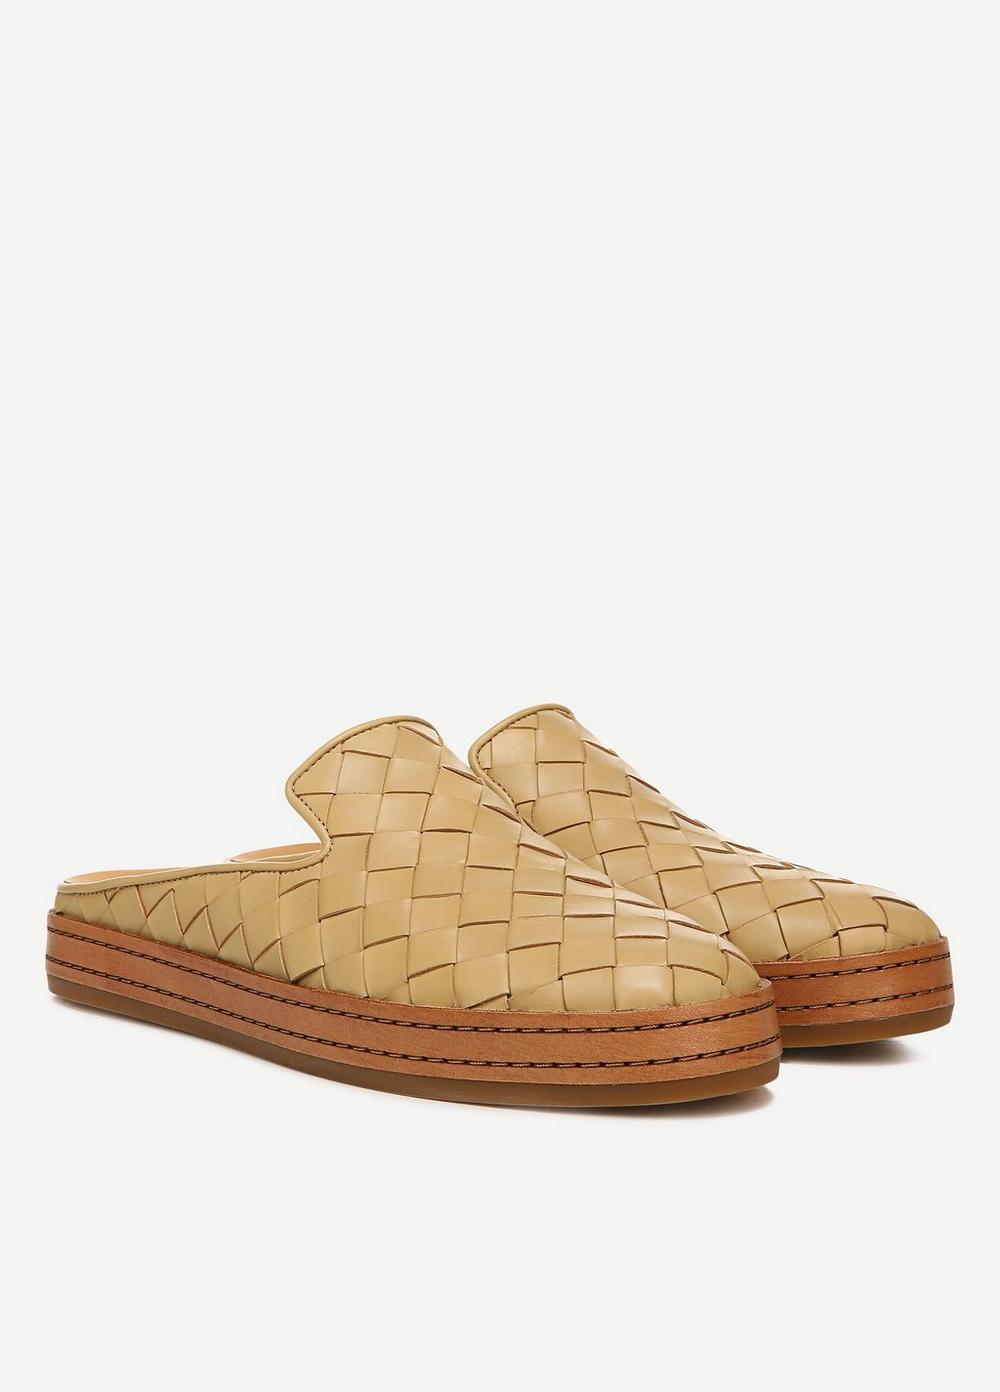 Canella Woven Leather Slip On Sandal